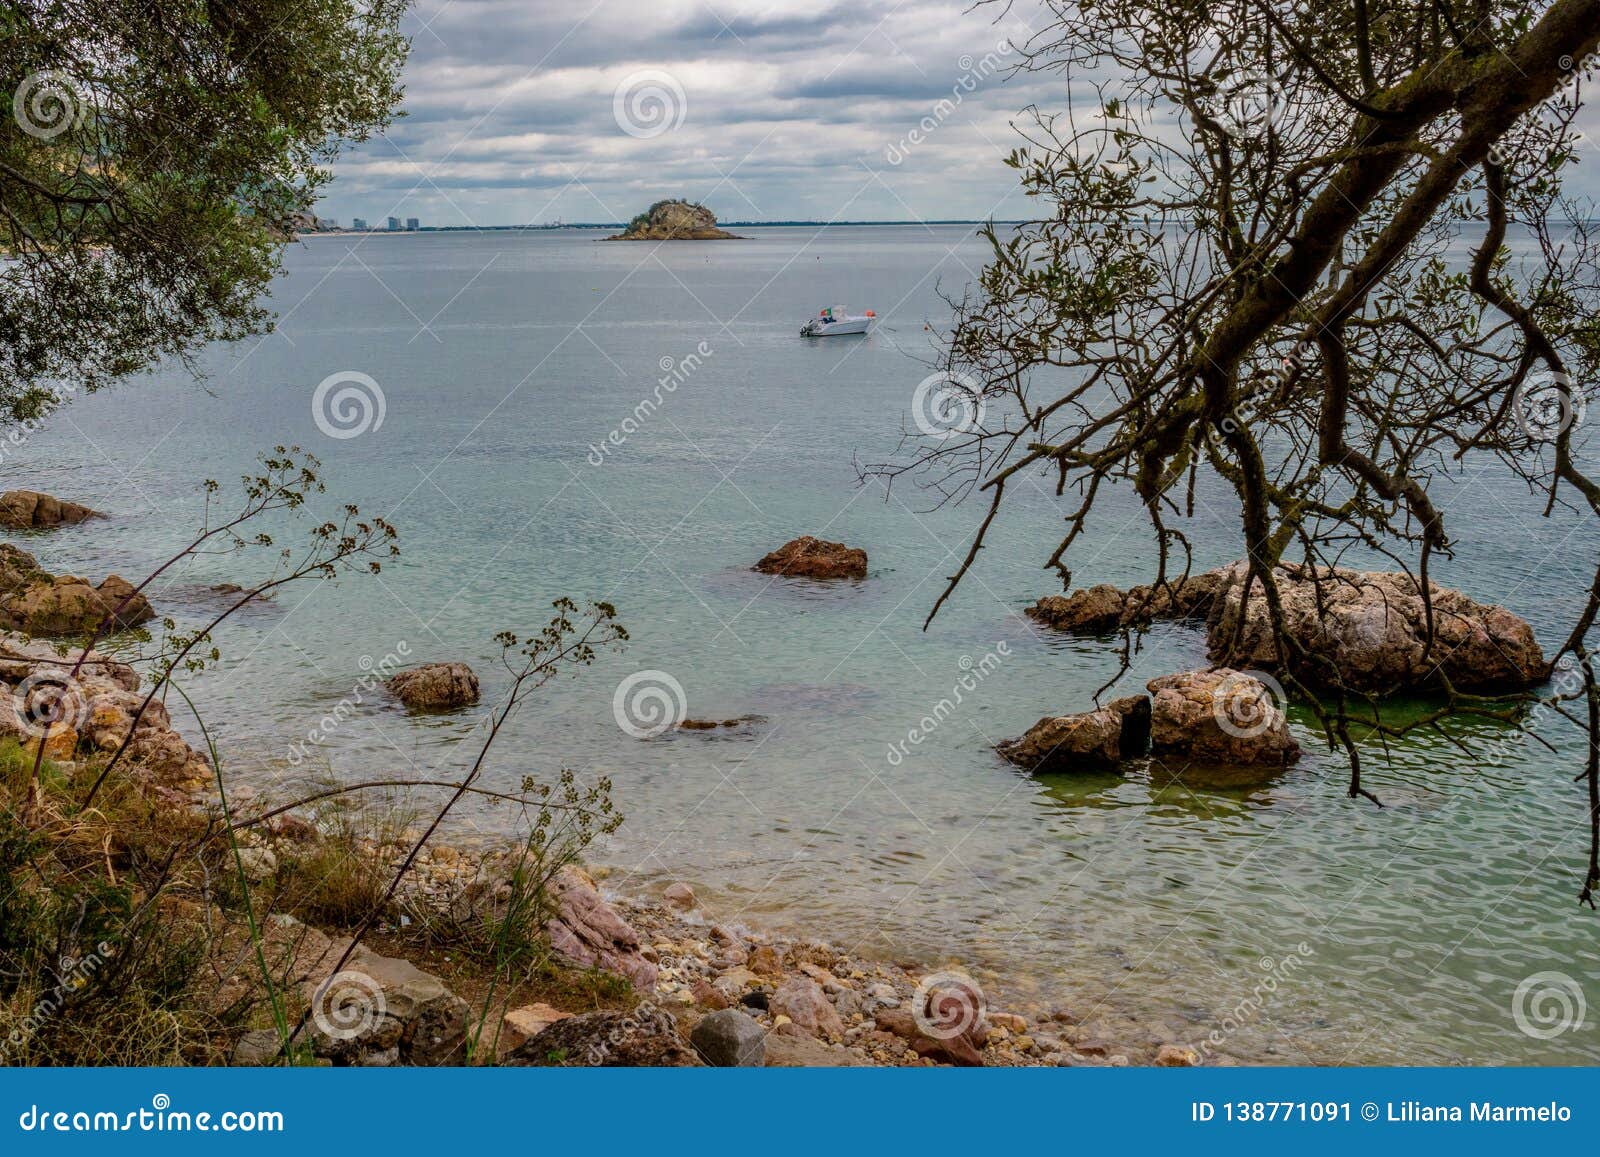 idyllic landscape with branches, clear water and recreational boat, creiro beach - serra da arrÃÂ¡bida natural park, setÃÂºbal - por